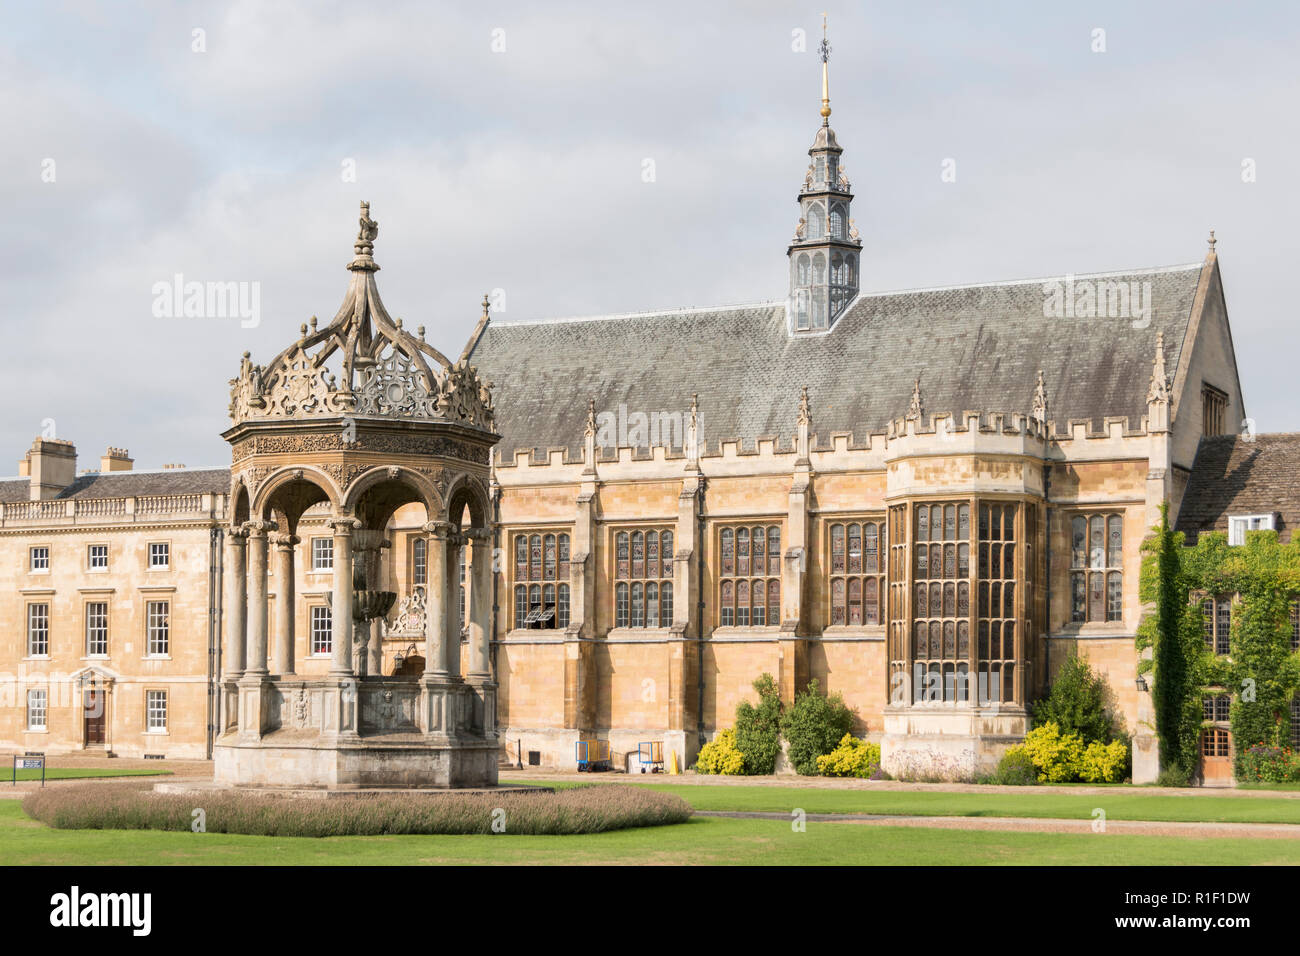 Trinity College, Cambridge, England, UK Banque D'Images